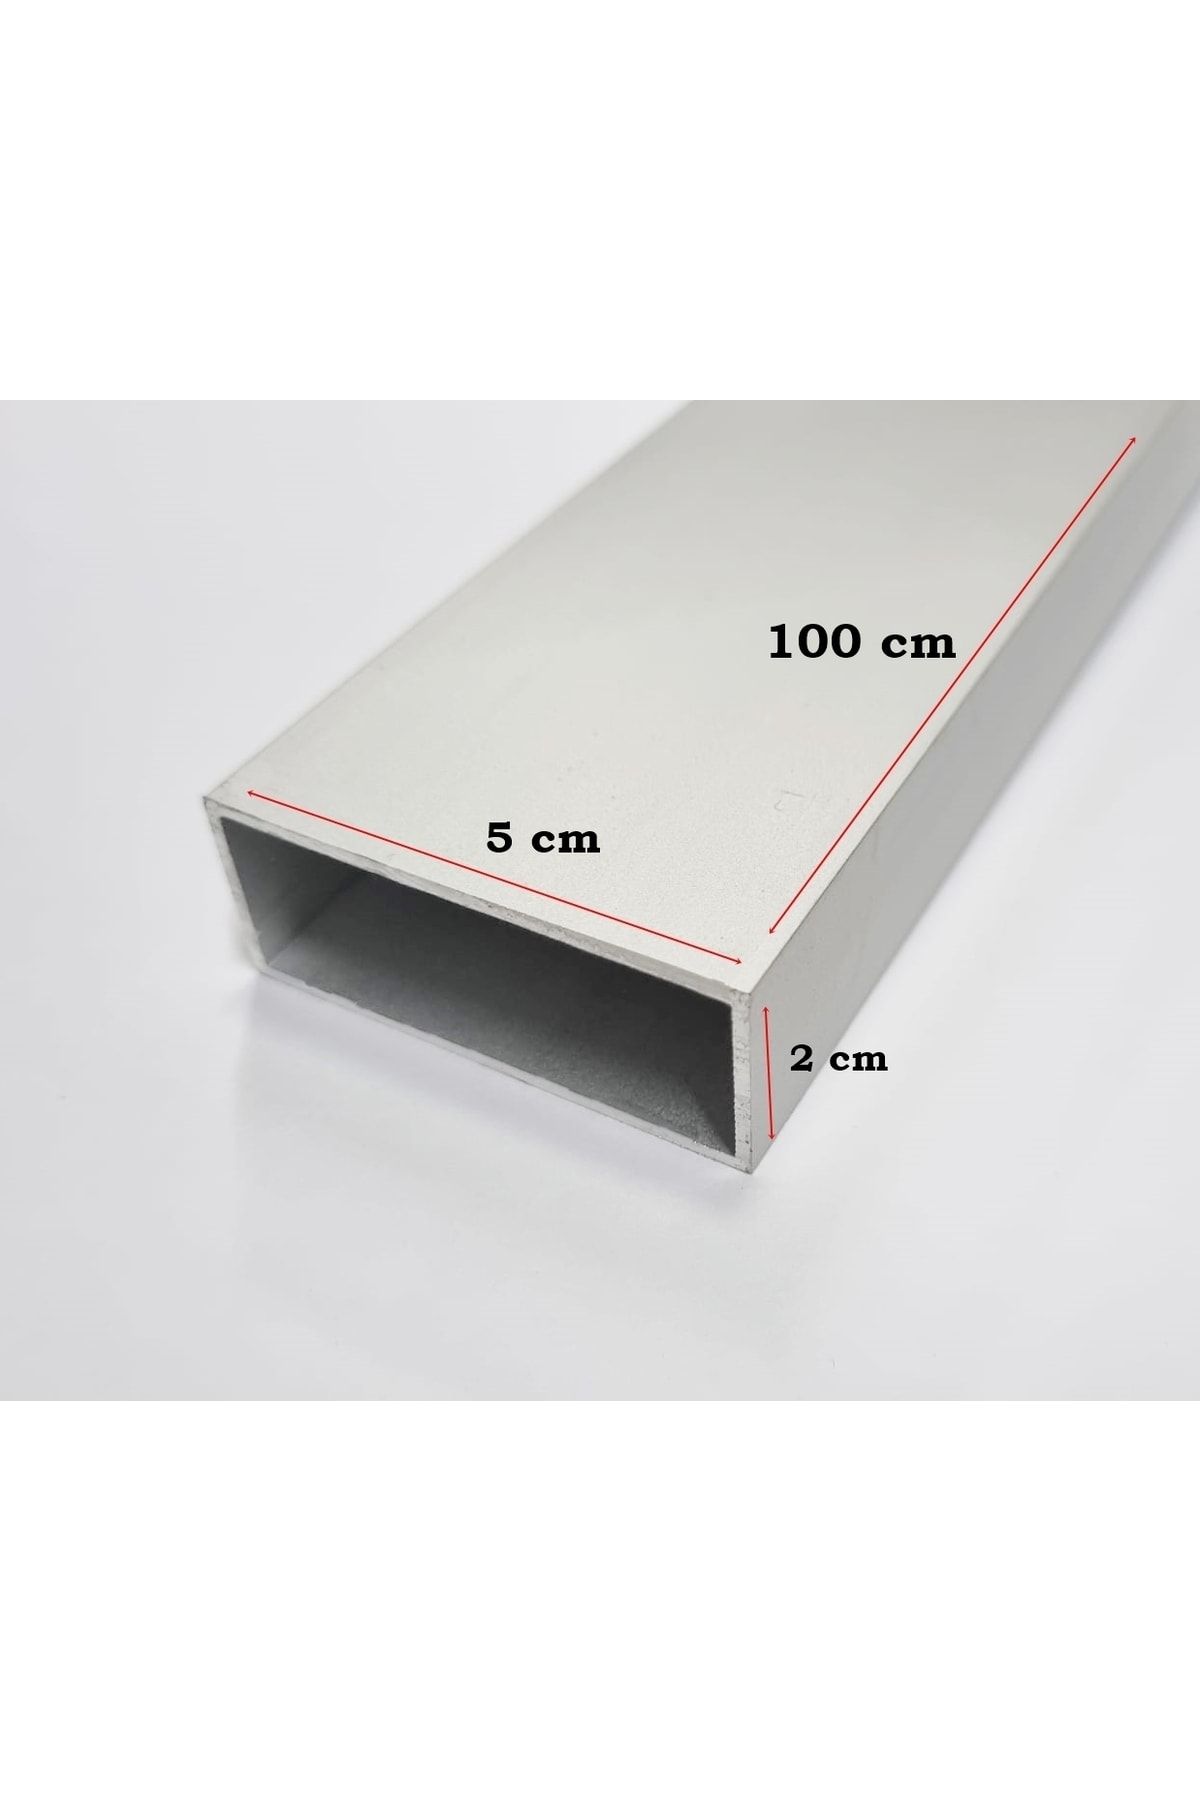 Şahin Alüminyum Kutu Profil Alüminyum Dikdörtgen Profil 1,2 mm Kalınlık ( 2 cm X 5 cm x 100 cm )